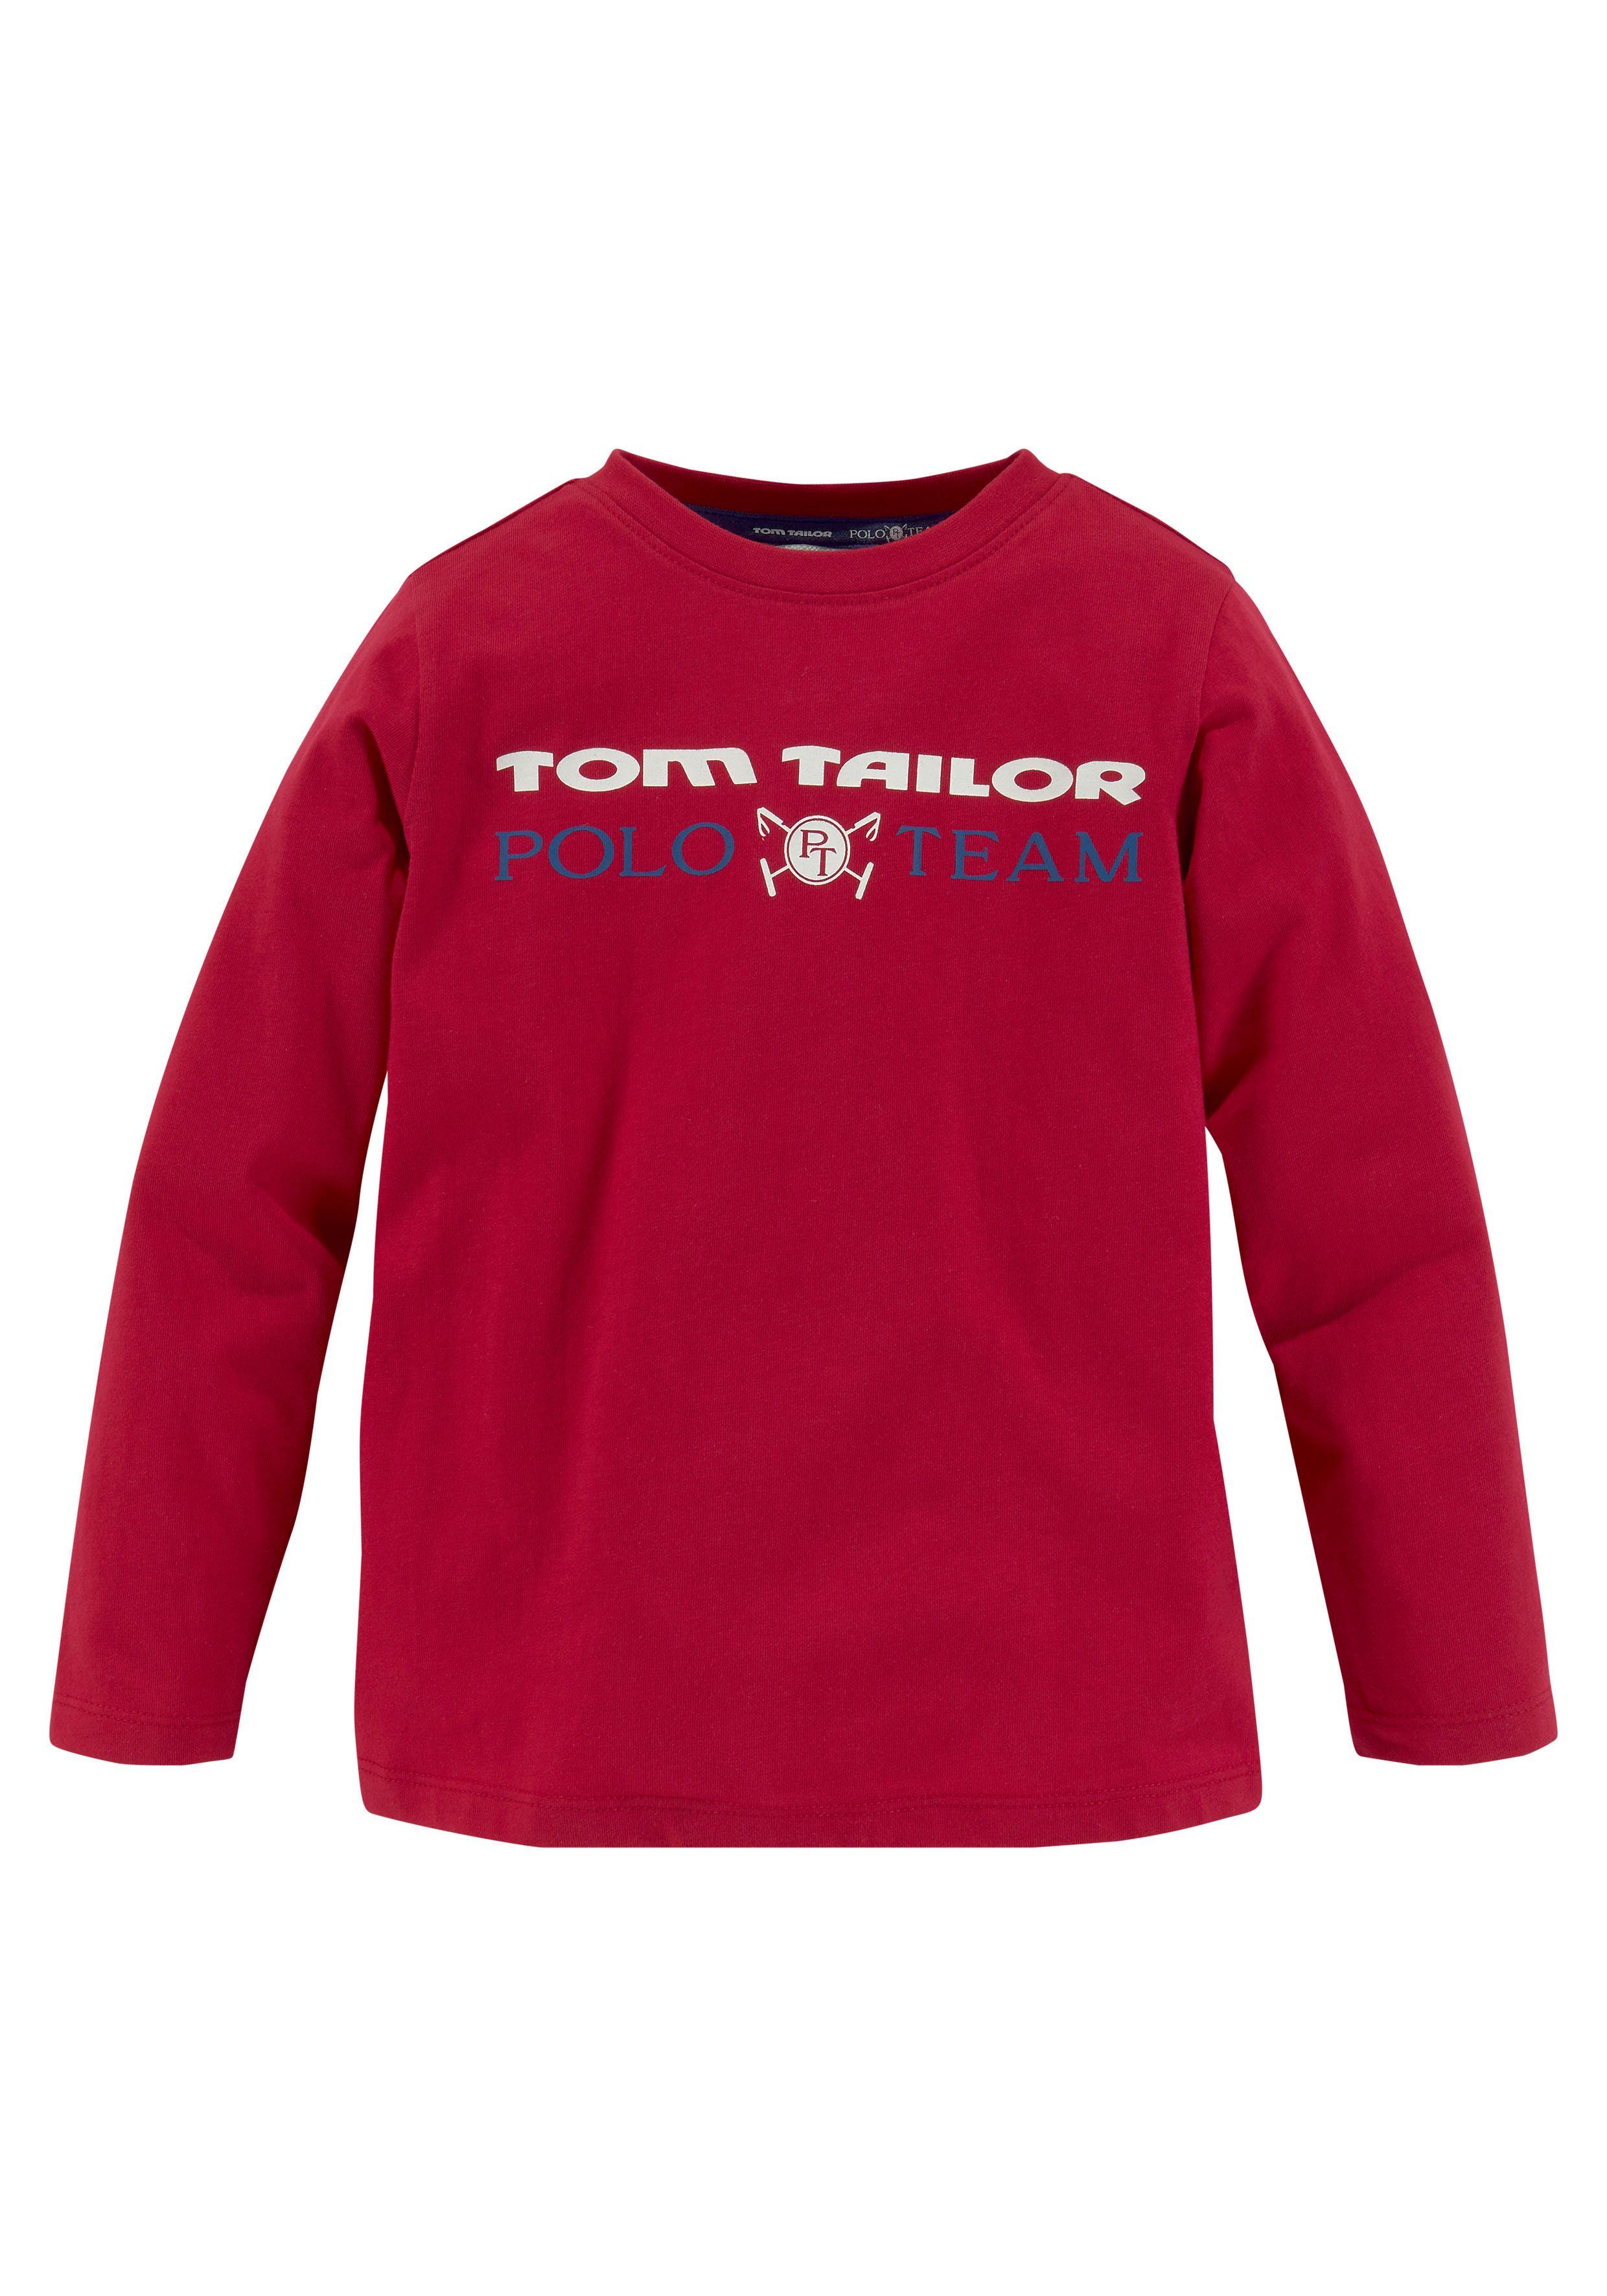 TOM TAILOR Polo Team Langarmshirt online kaufen | OTTO